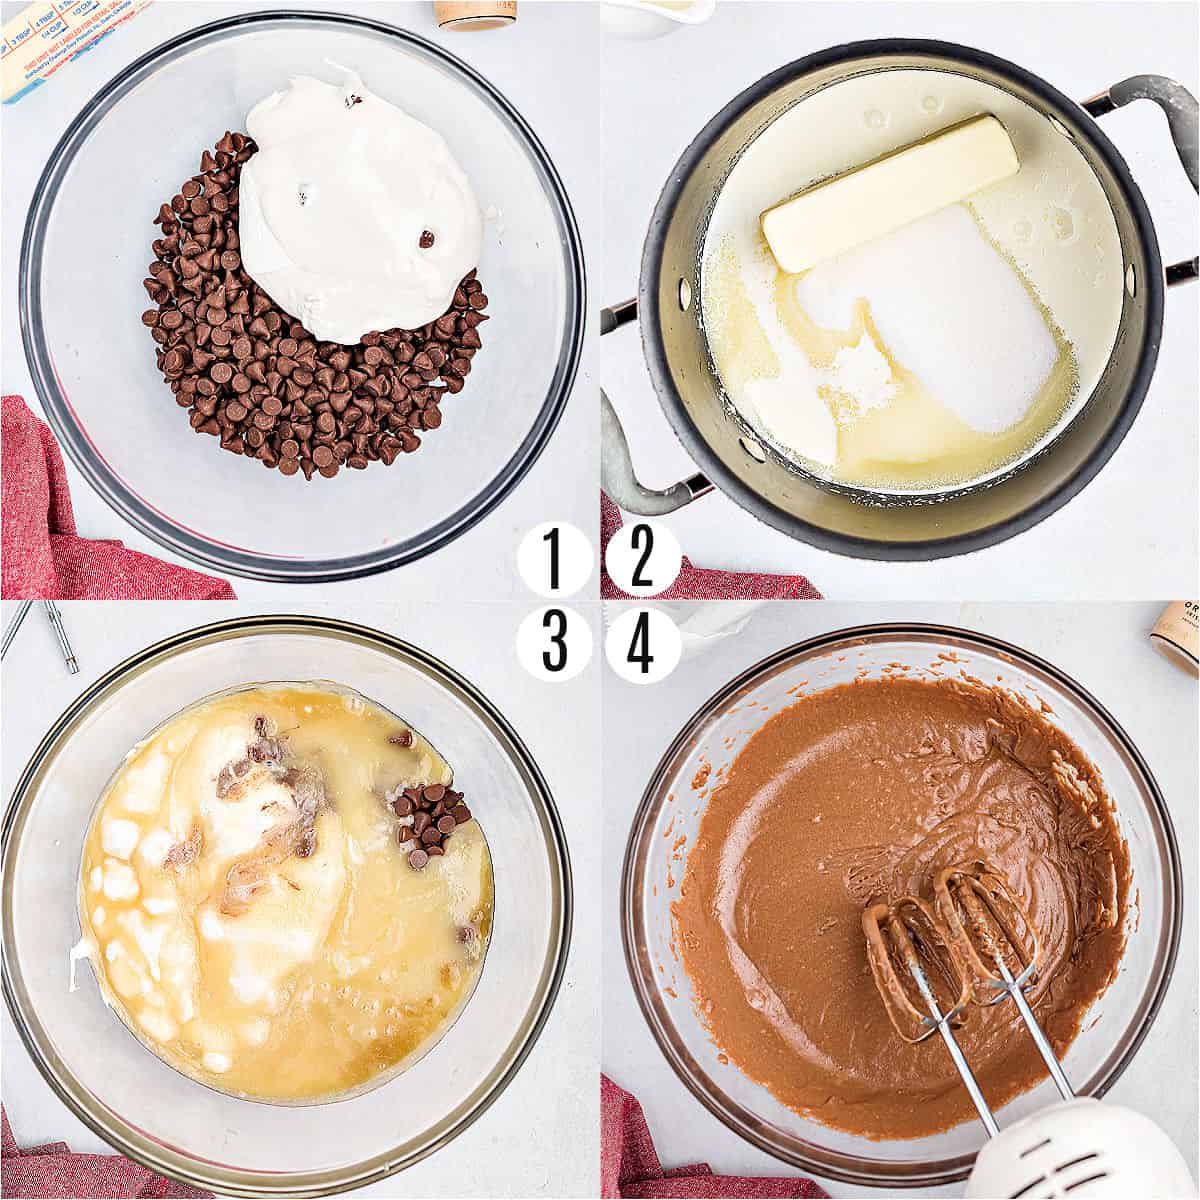 Step by step photos showing how to make irish cream fudge.